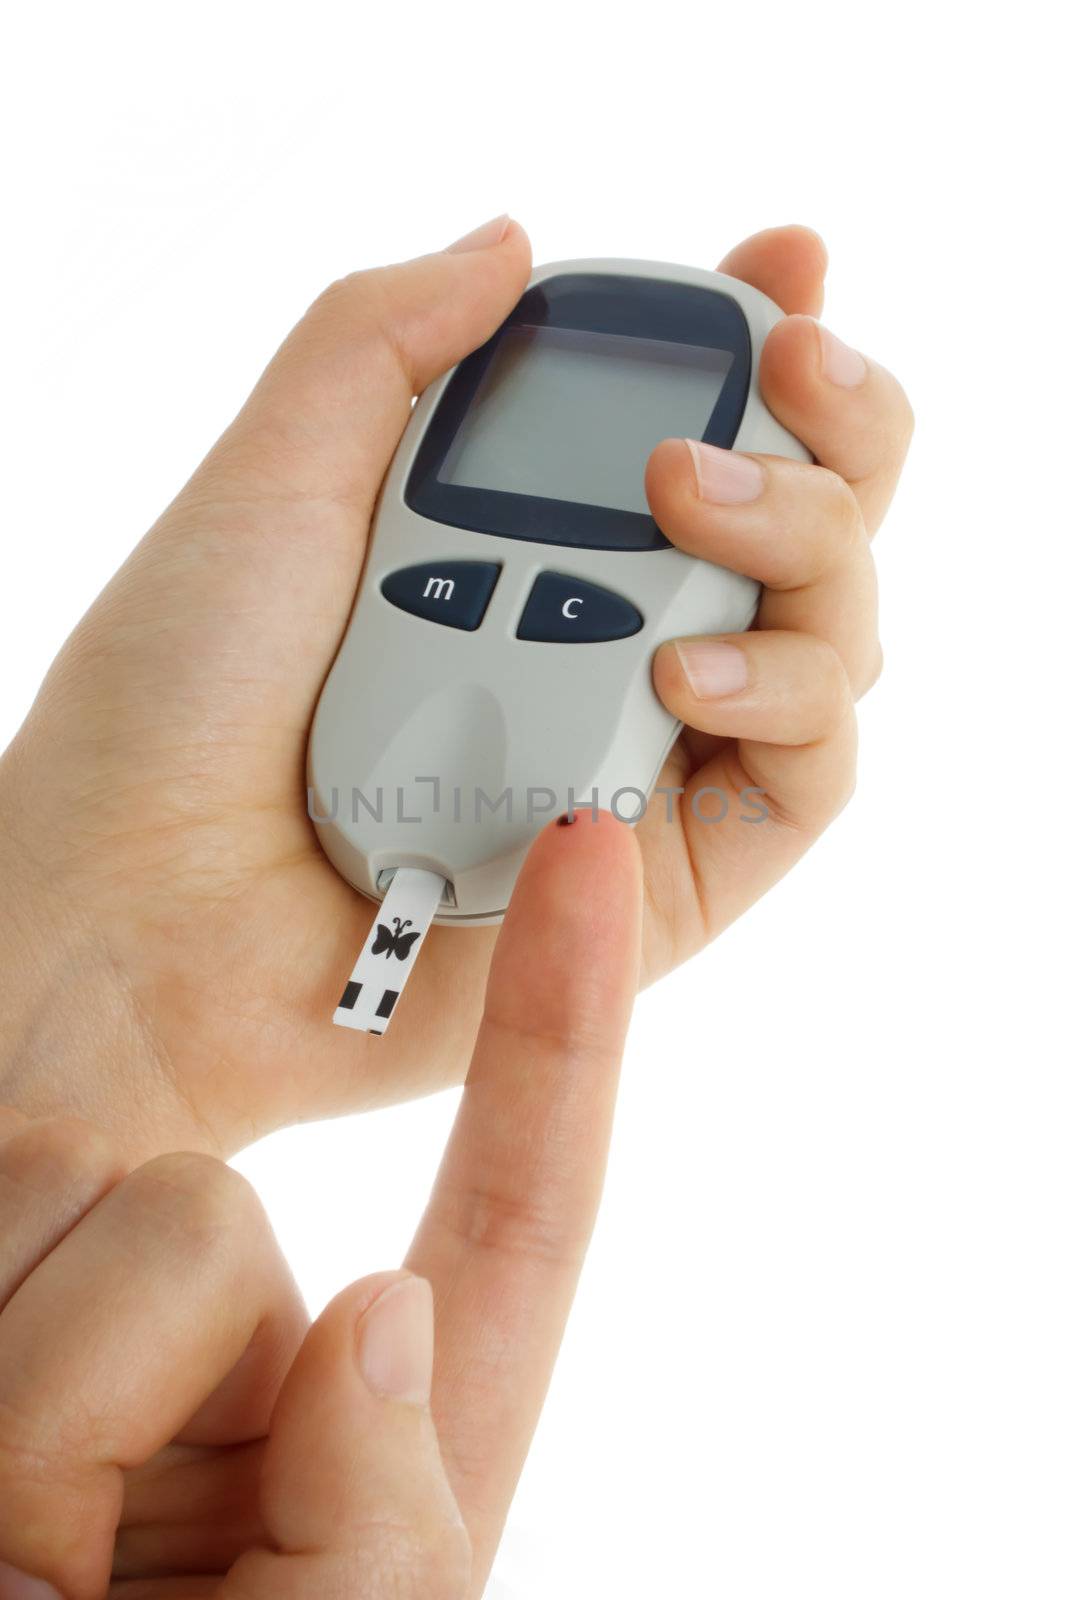 Blood sugar test over white background